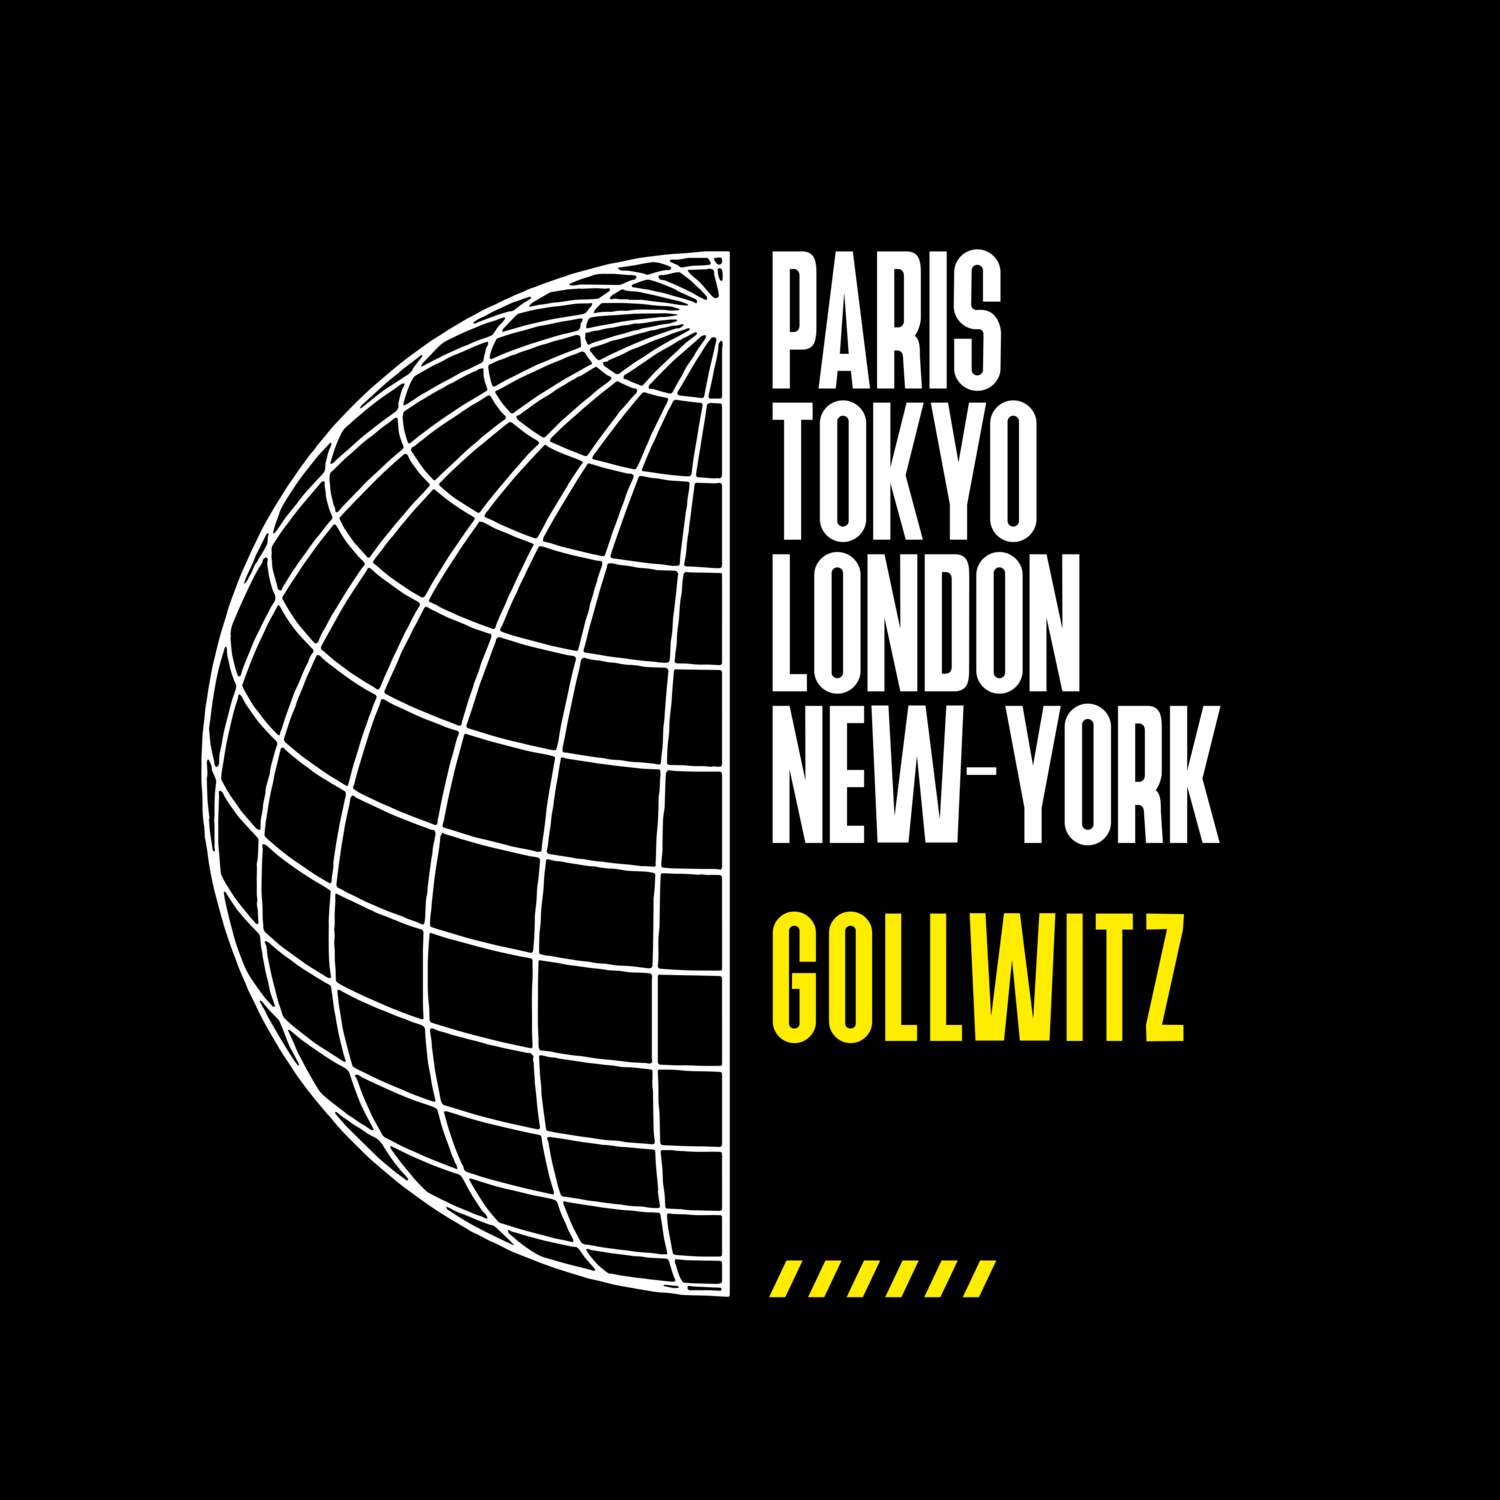 Gollwitz T-Shirt »Paris Tokyo London«